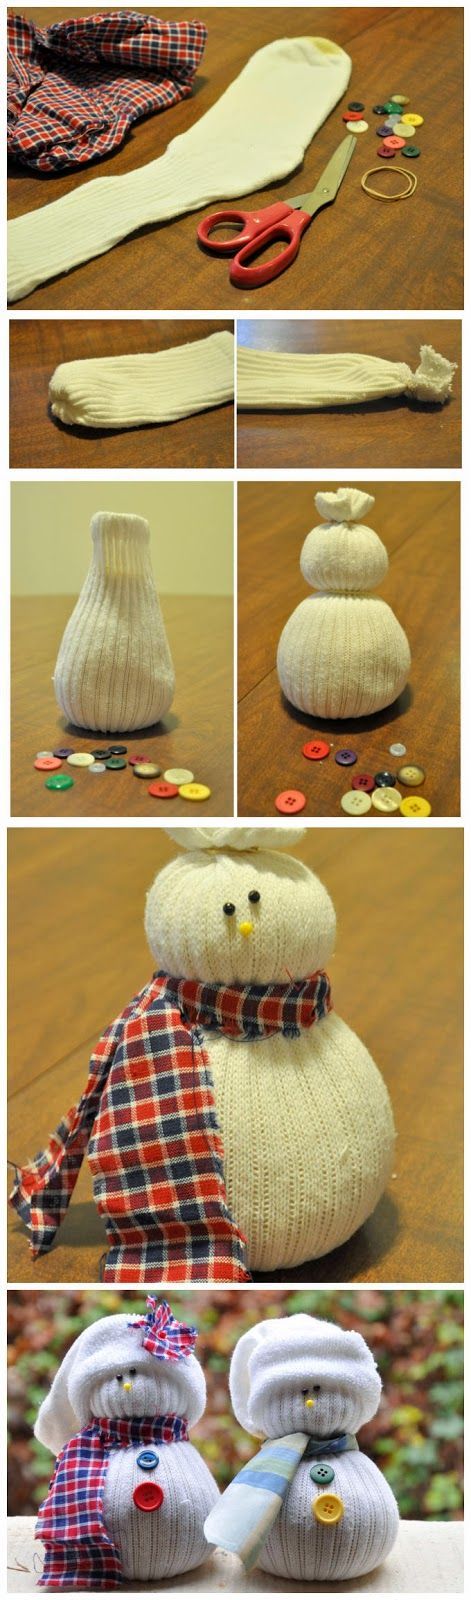 Sock snowmen! Such a cute craft project.